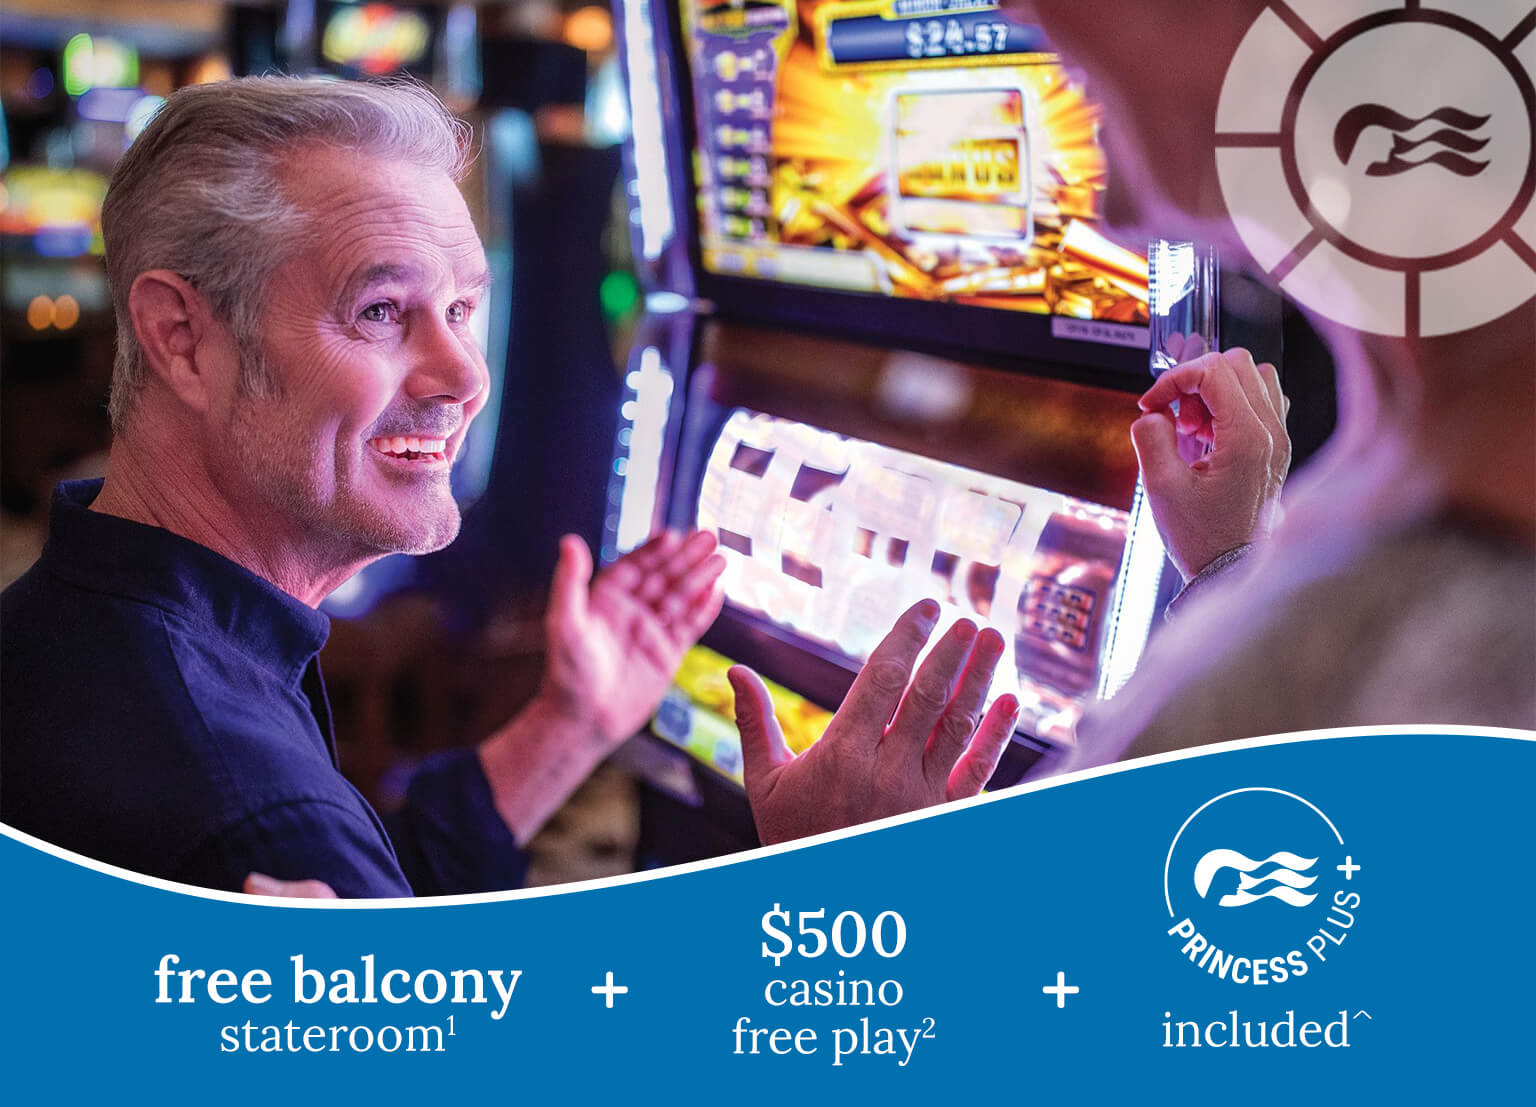 free balcony stateroom1 + $500 casino free play2 + princess plus included^